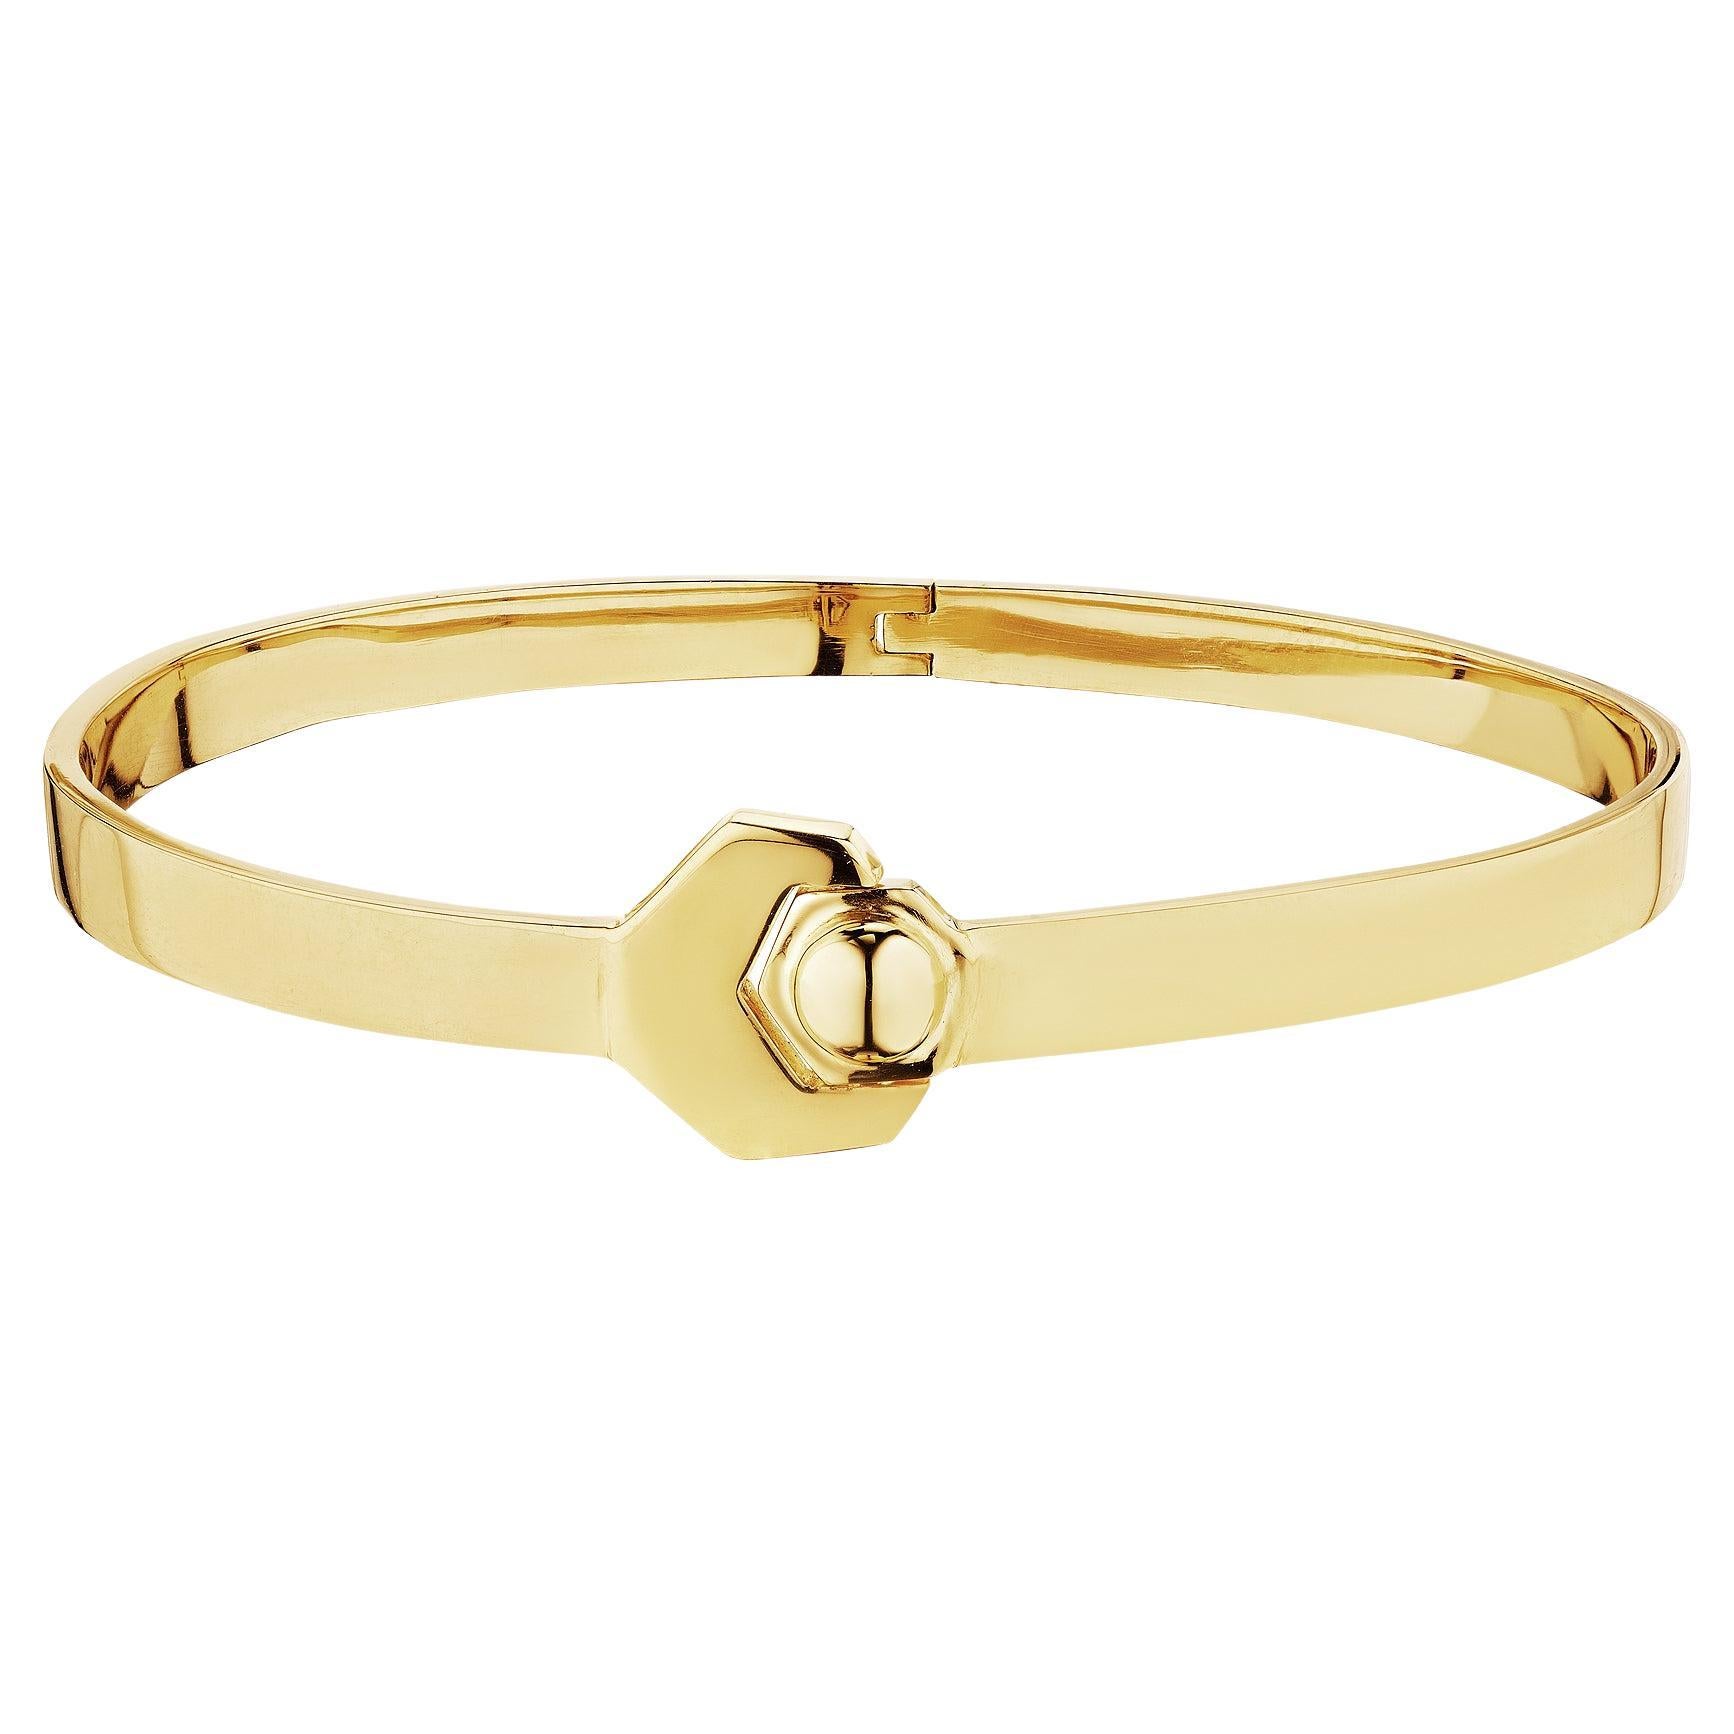 Aldo Cipullo Modernist Gold Wrench Bangle Bracelet For Sale